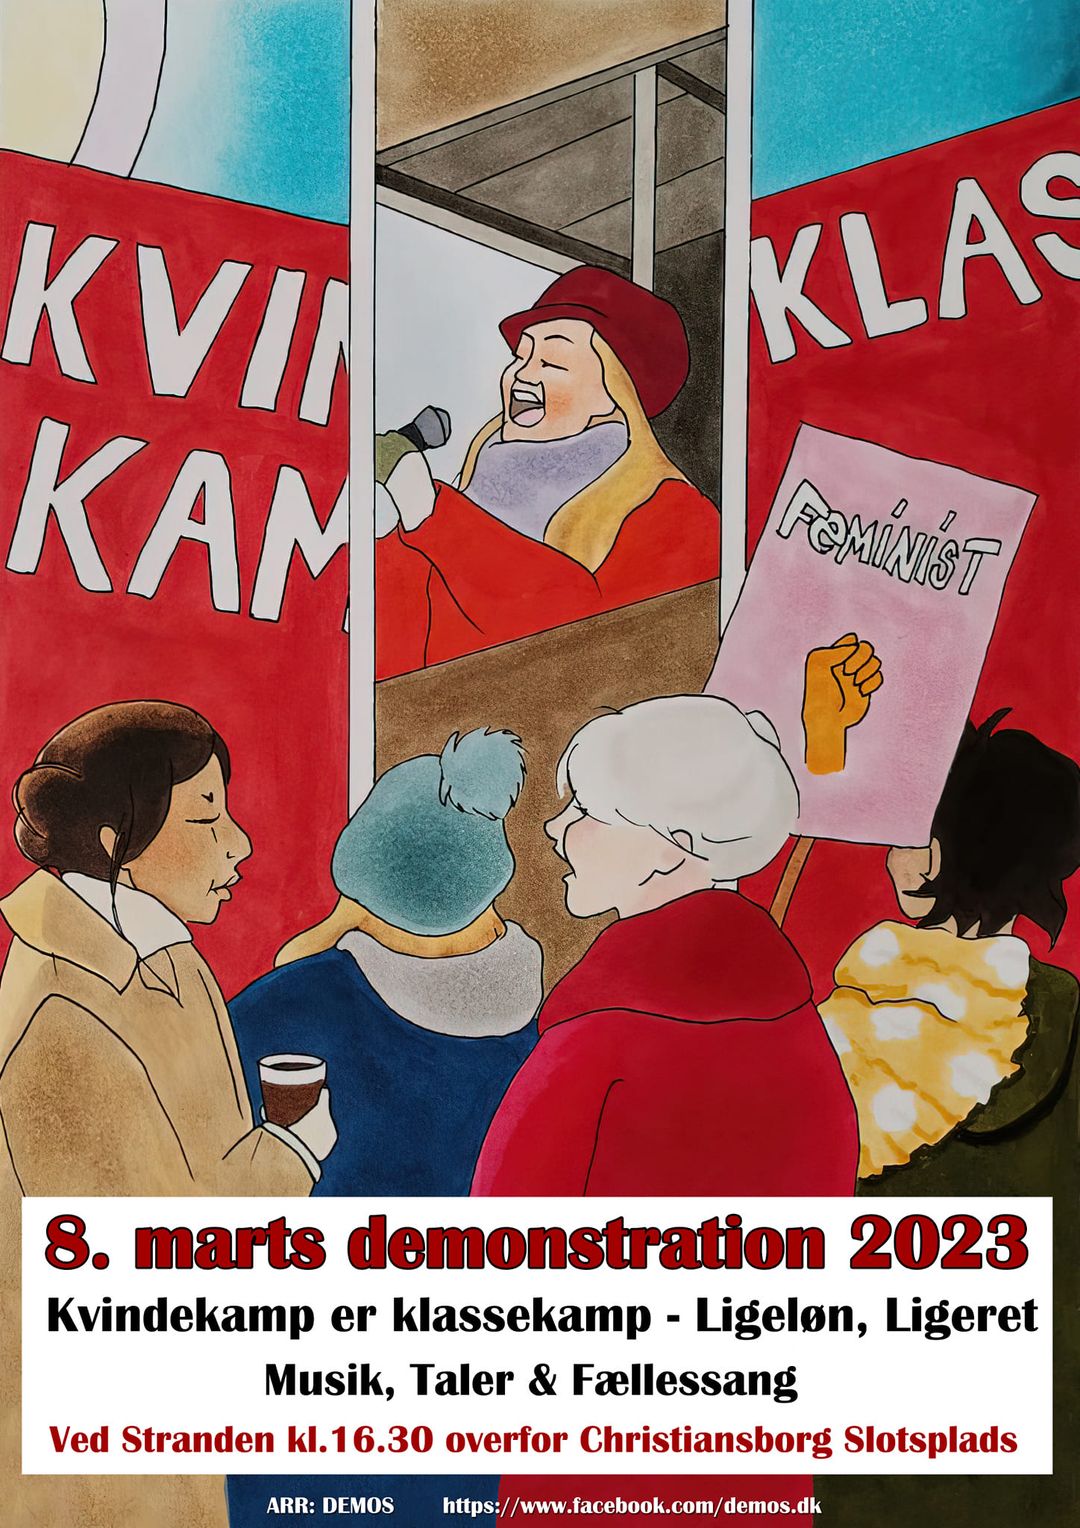 Gyda Hedings tale v. 8. marts 2023 demonstrationen